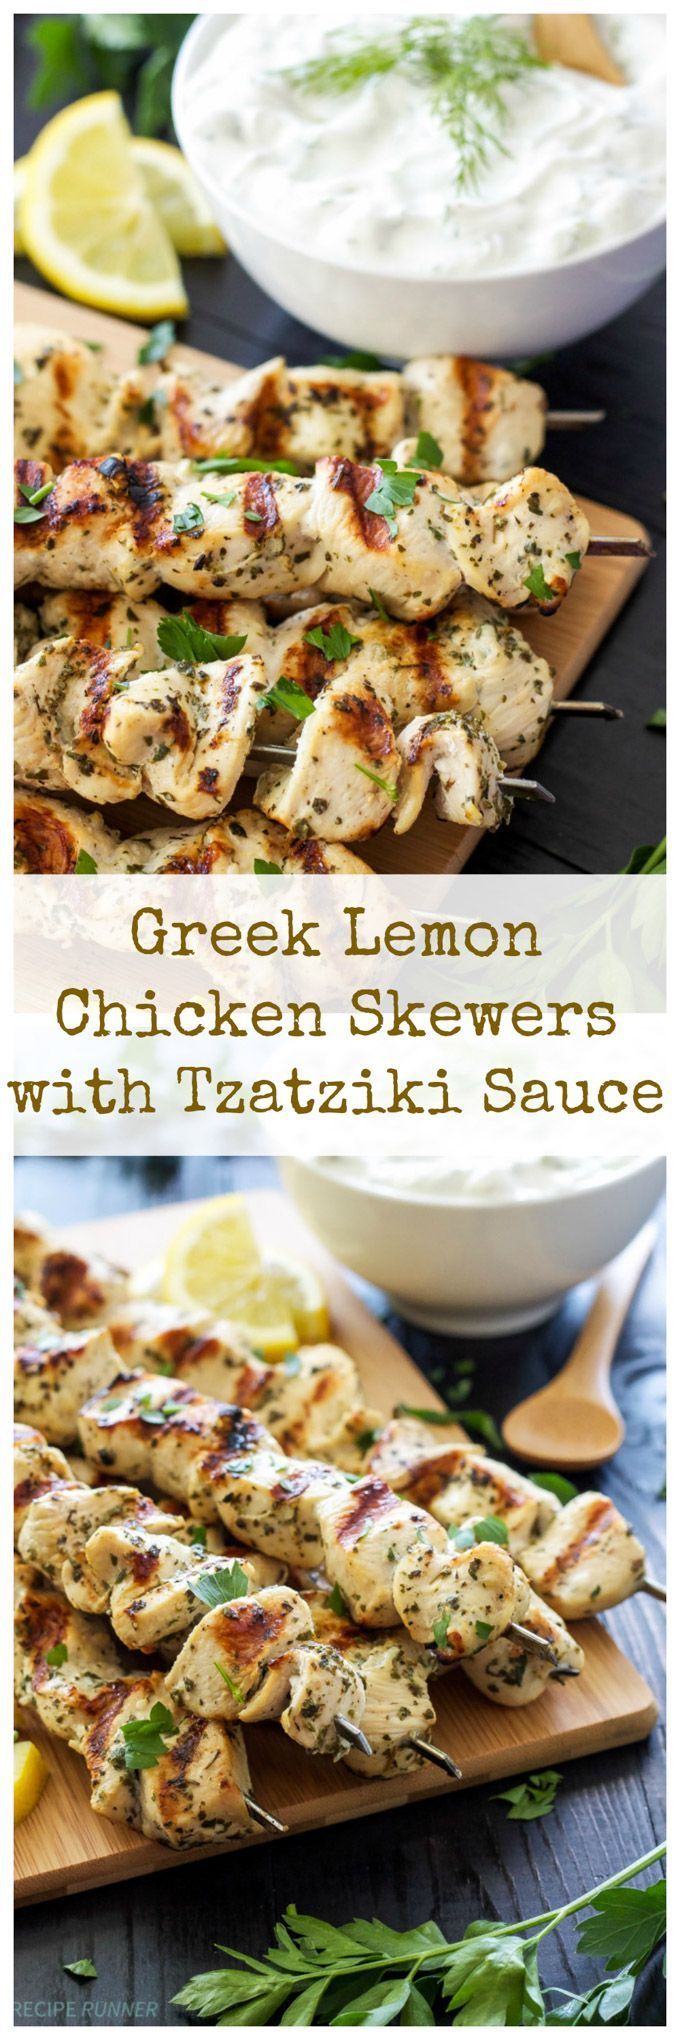 Greek Lemon Chicken Skewers with Tzatziki Sauce | Delicious and healthy Greek chicken skewers with a sauce